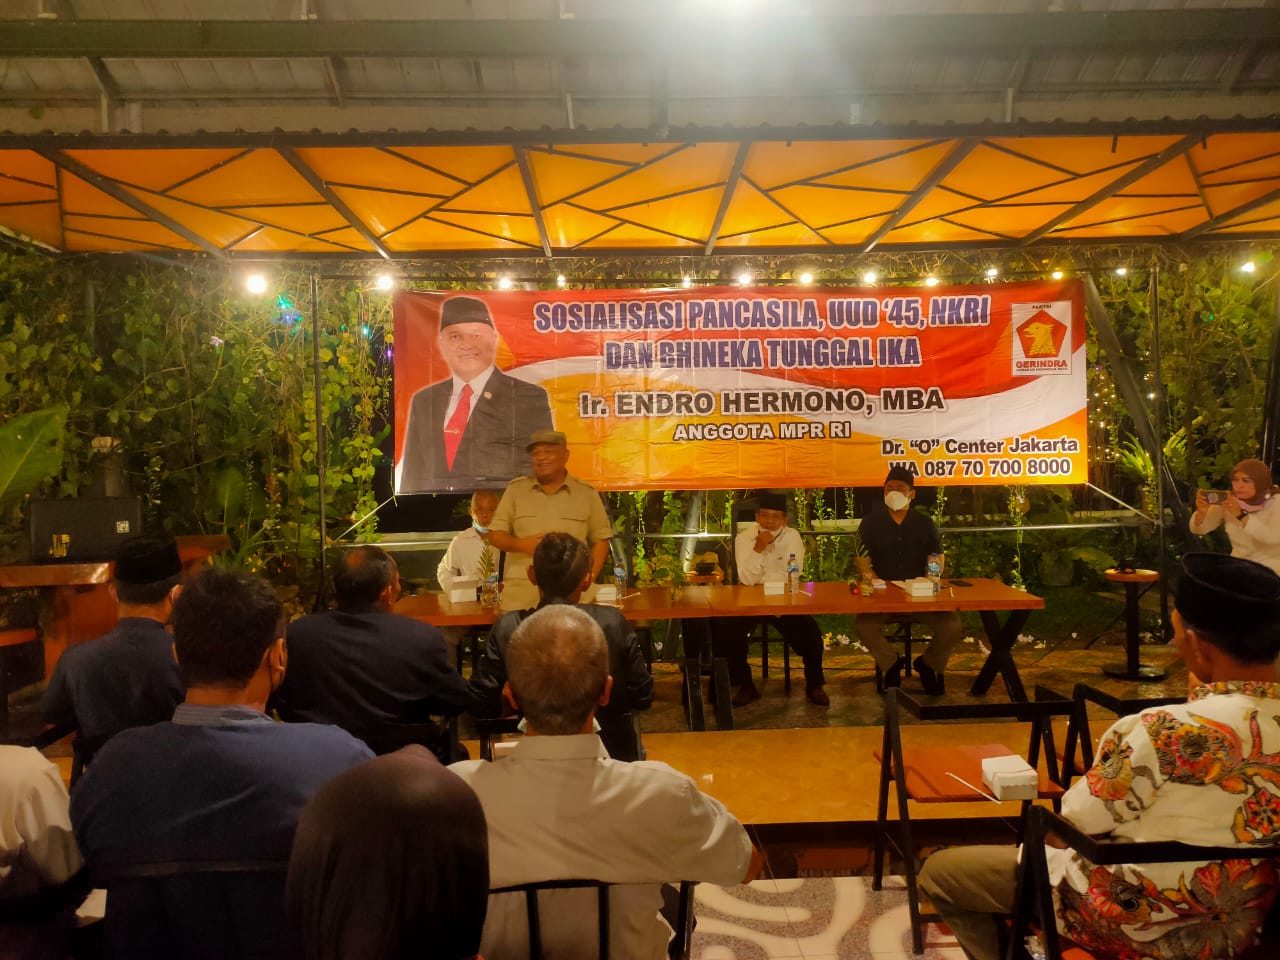 Anggota MPR-RI, Endro Hermono Gelar Sosialisasi Pancasila, UUD 45, NKRI dan Bhinneka Tunggal Ika